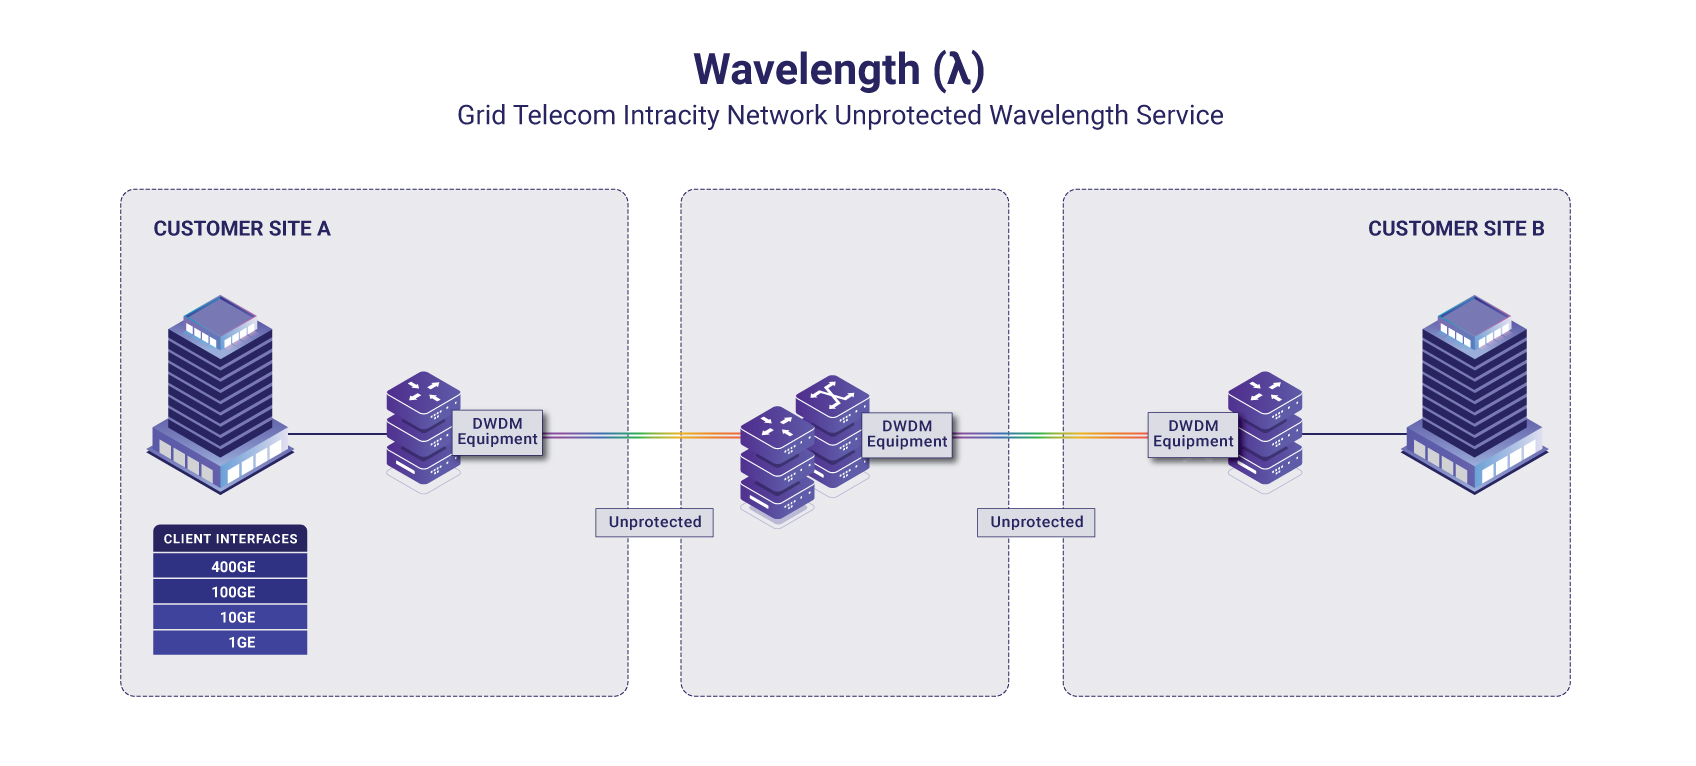 Grid Telecom Intracity Network Unprotected Wavelength Service